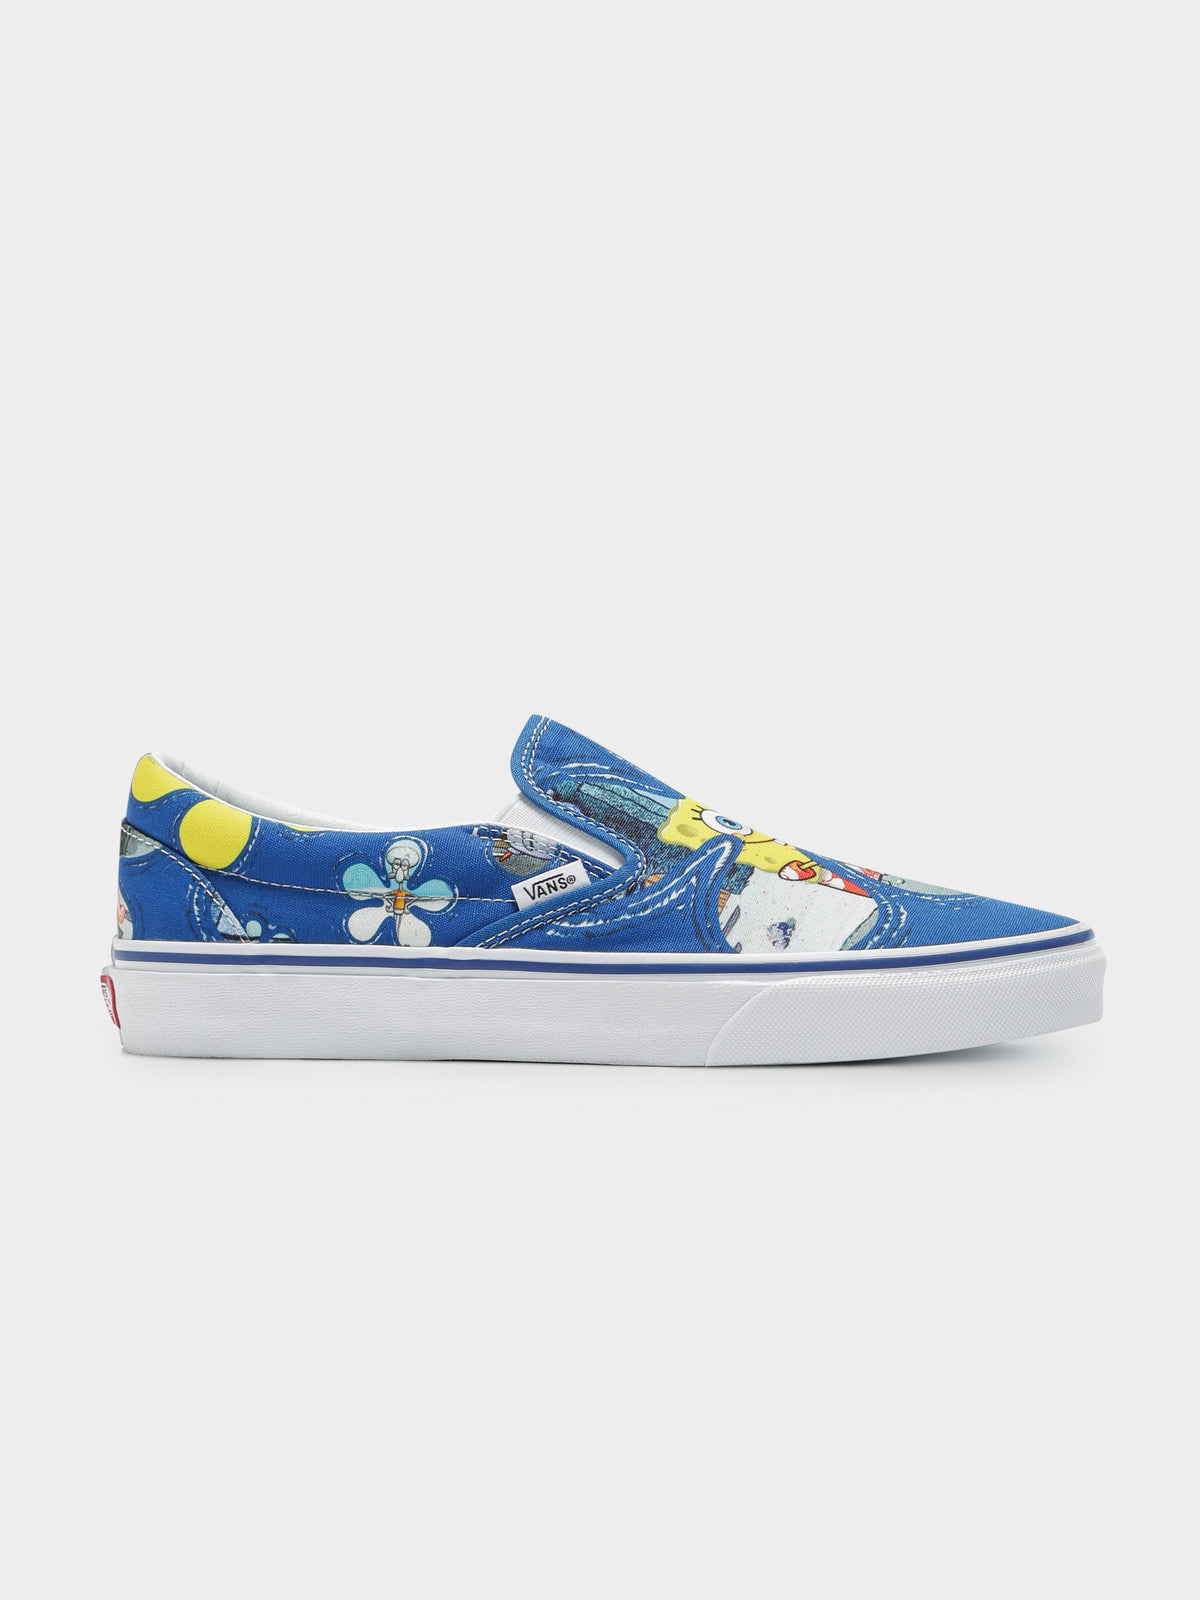 Unisex Classic Slip-On SpongeBob Sneakers in Blue